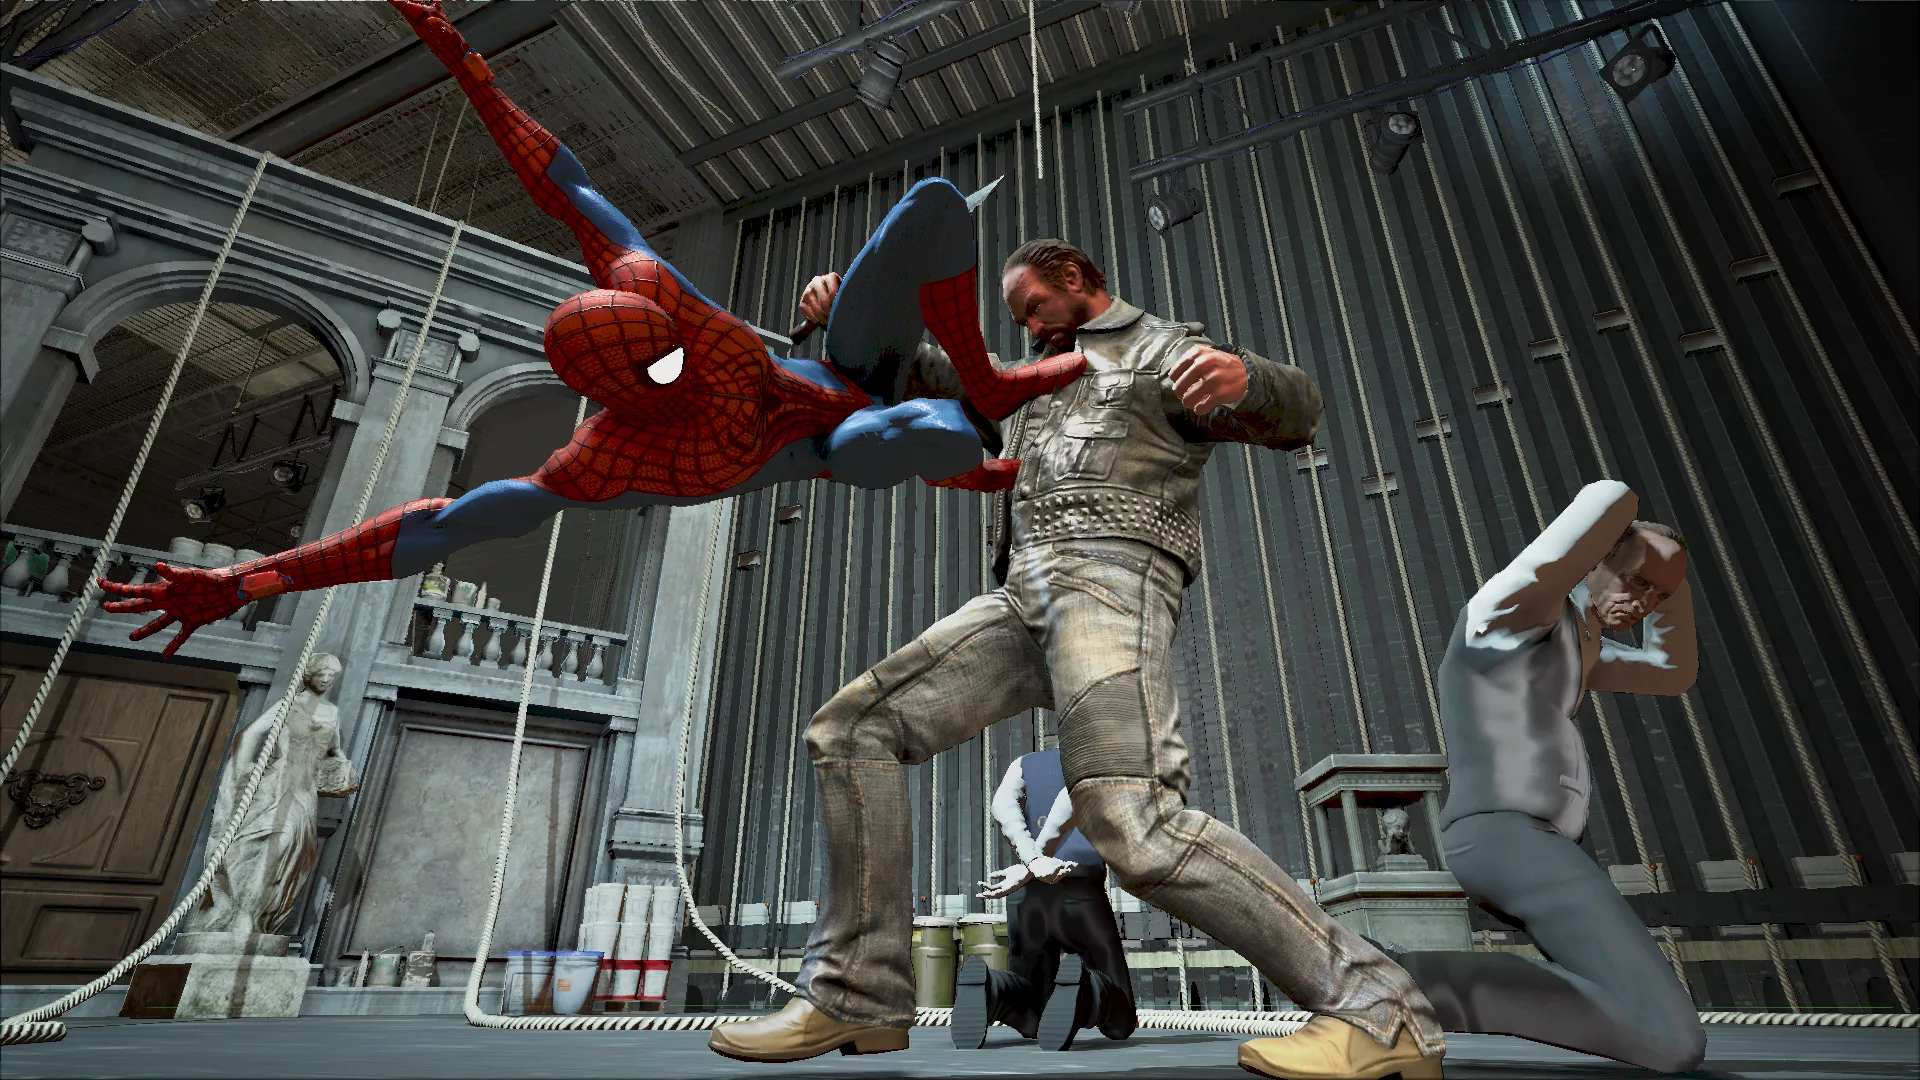 Игра 2 человек 1 и 2. The amazing Spider-man 2 игра. The amazing Spider-man (игра, 2012). Эмейзинг человек паук 2. Амазинг Спайдер Мэн игра.